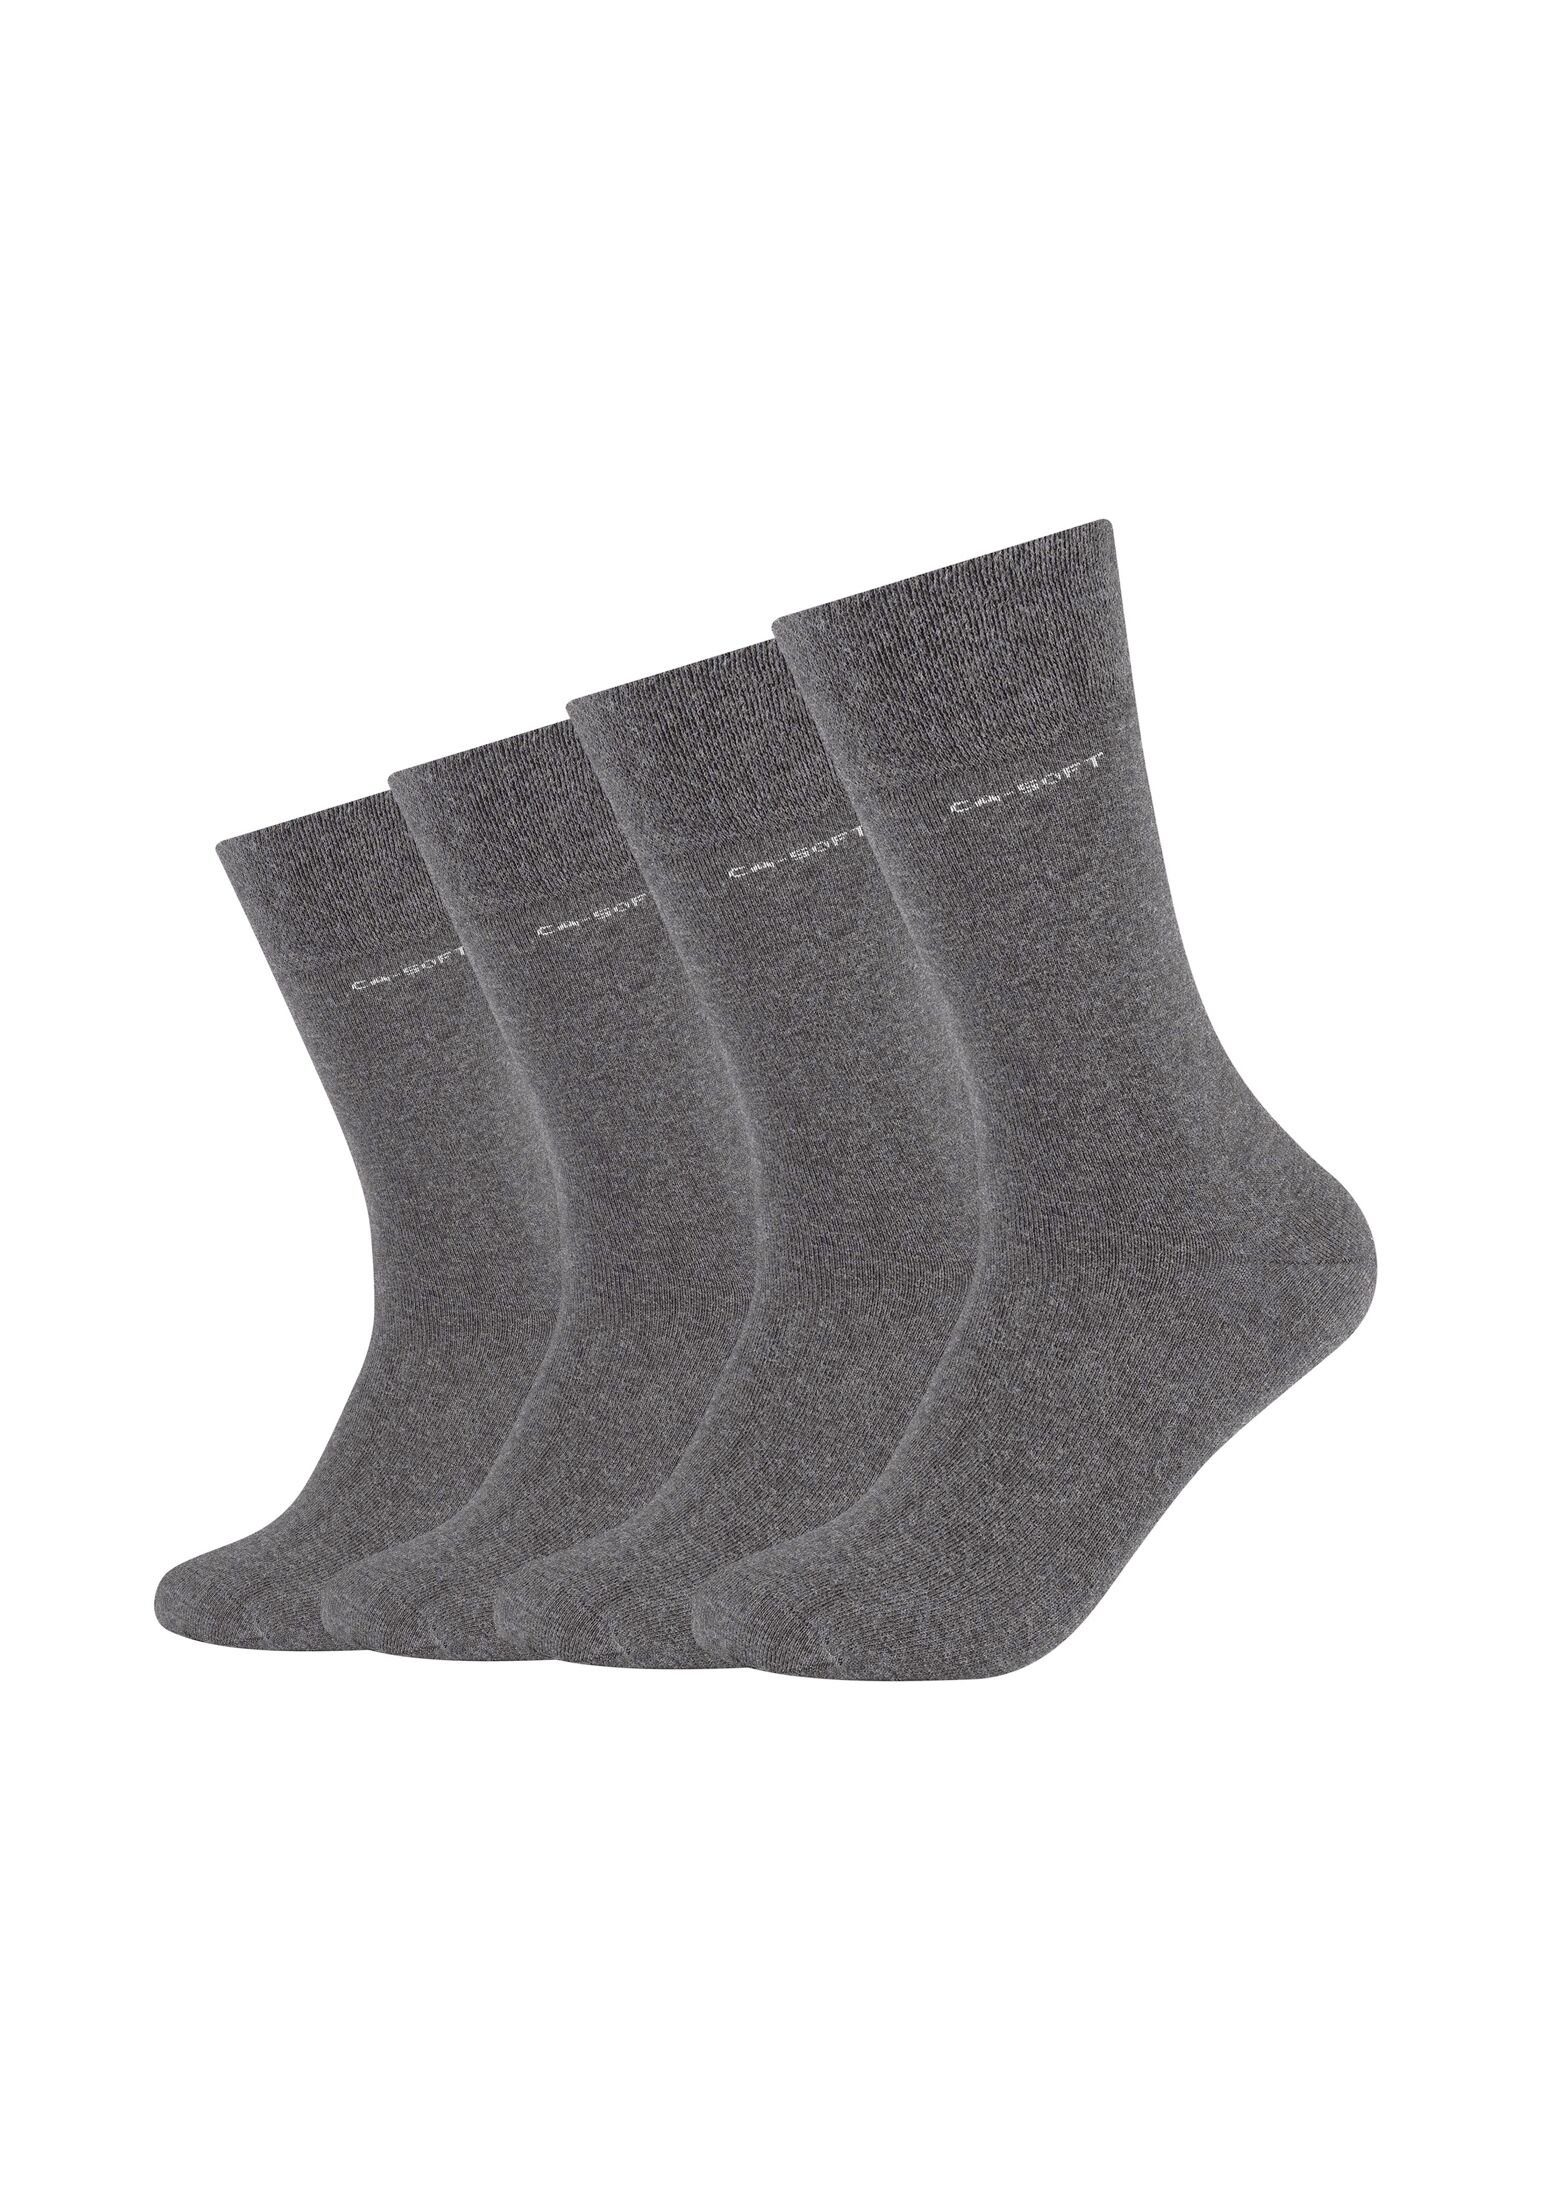 Camano Socken 4er Socken grey melange Pack dark